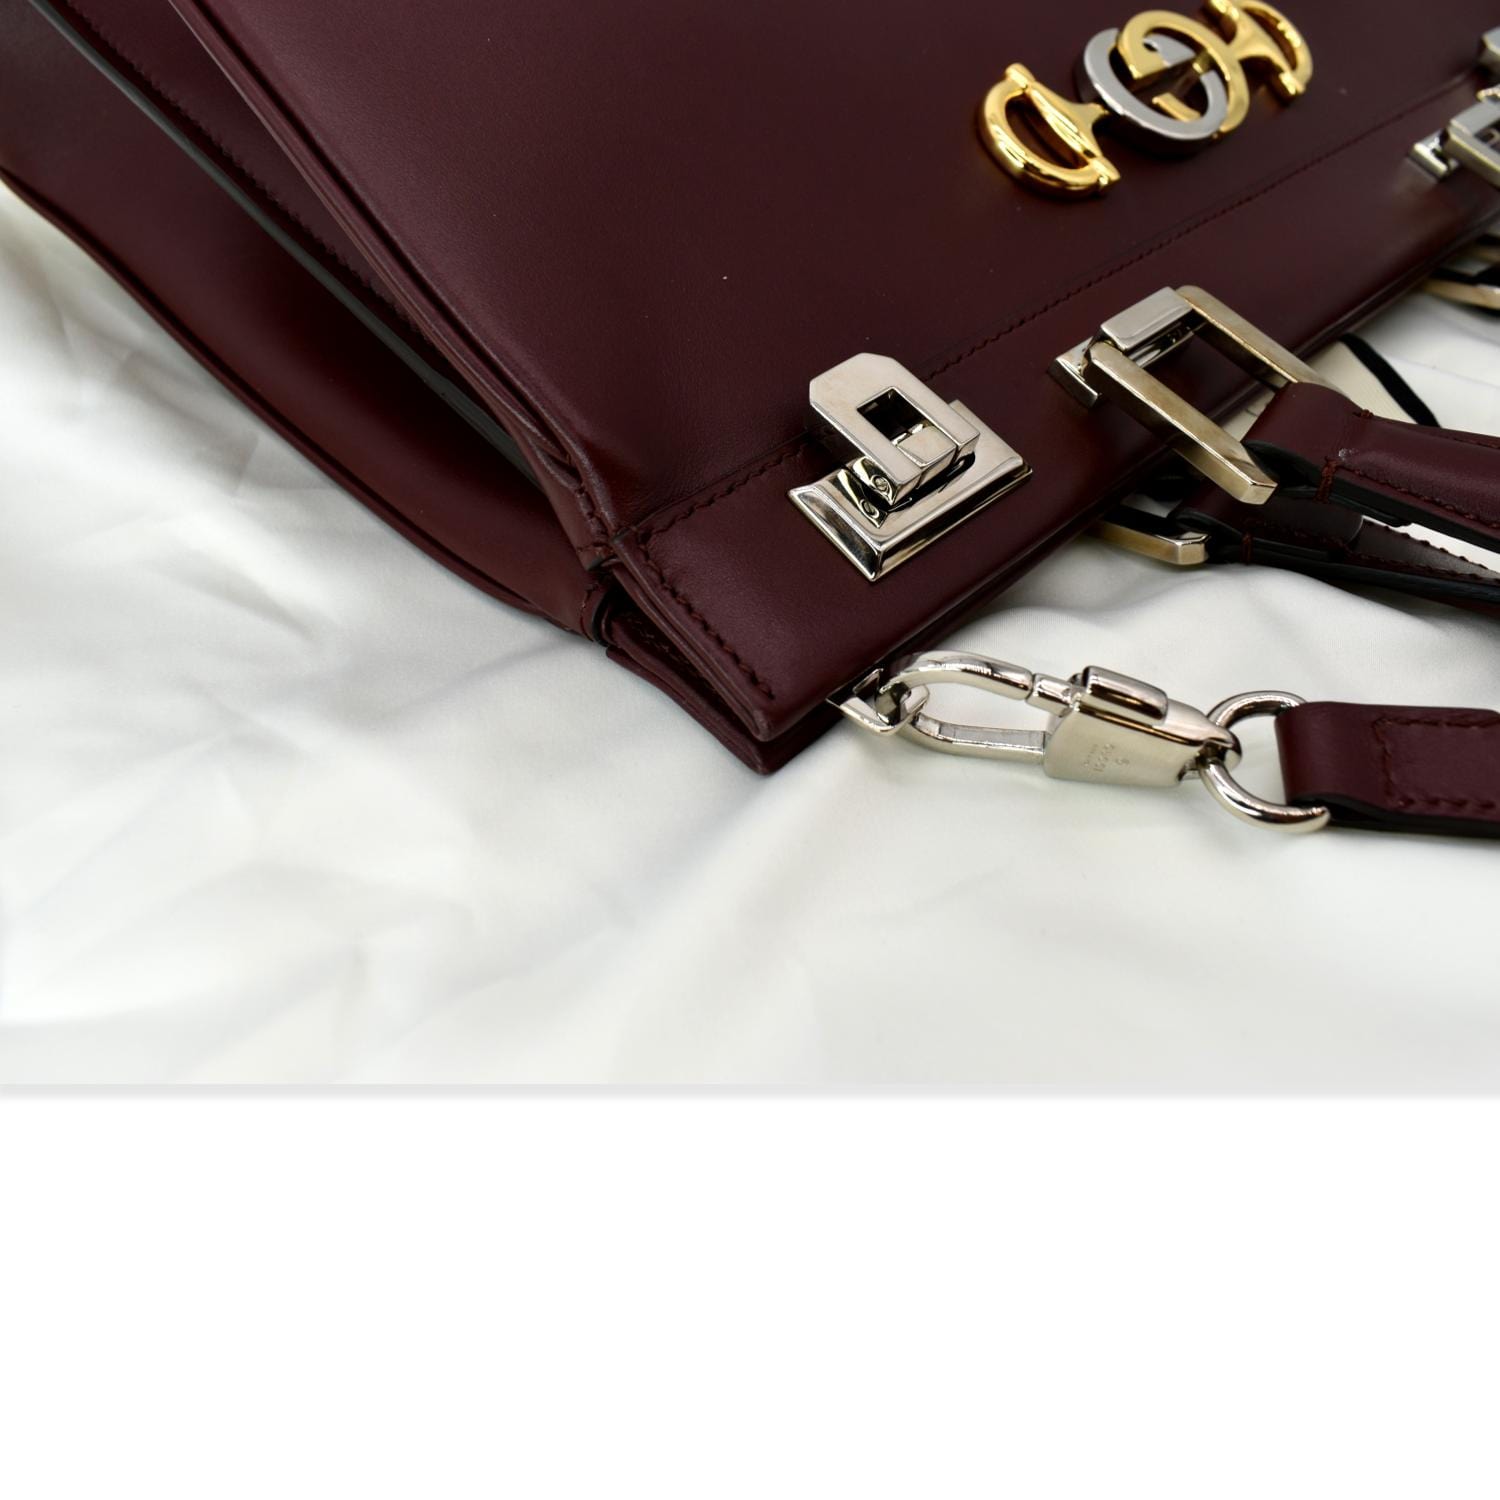 Gucci Zumi Ostrich Medium Top Handle Bag